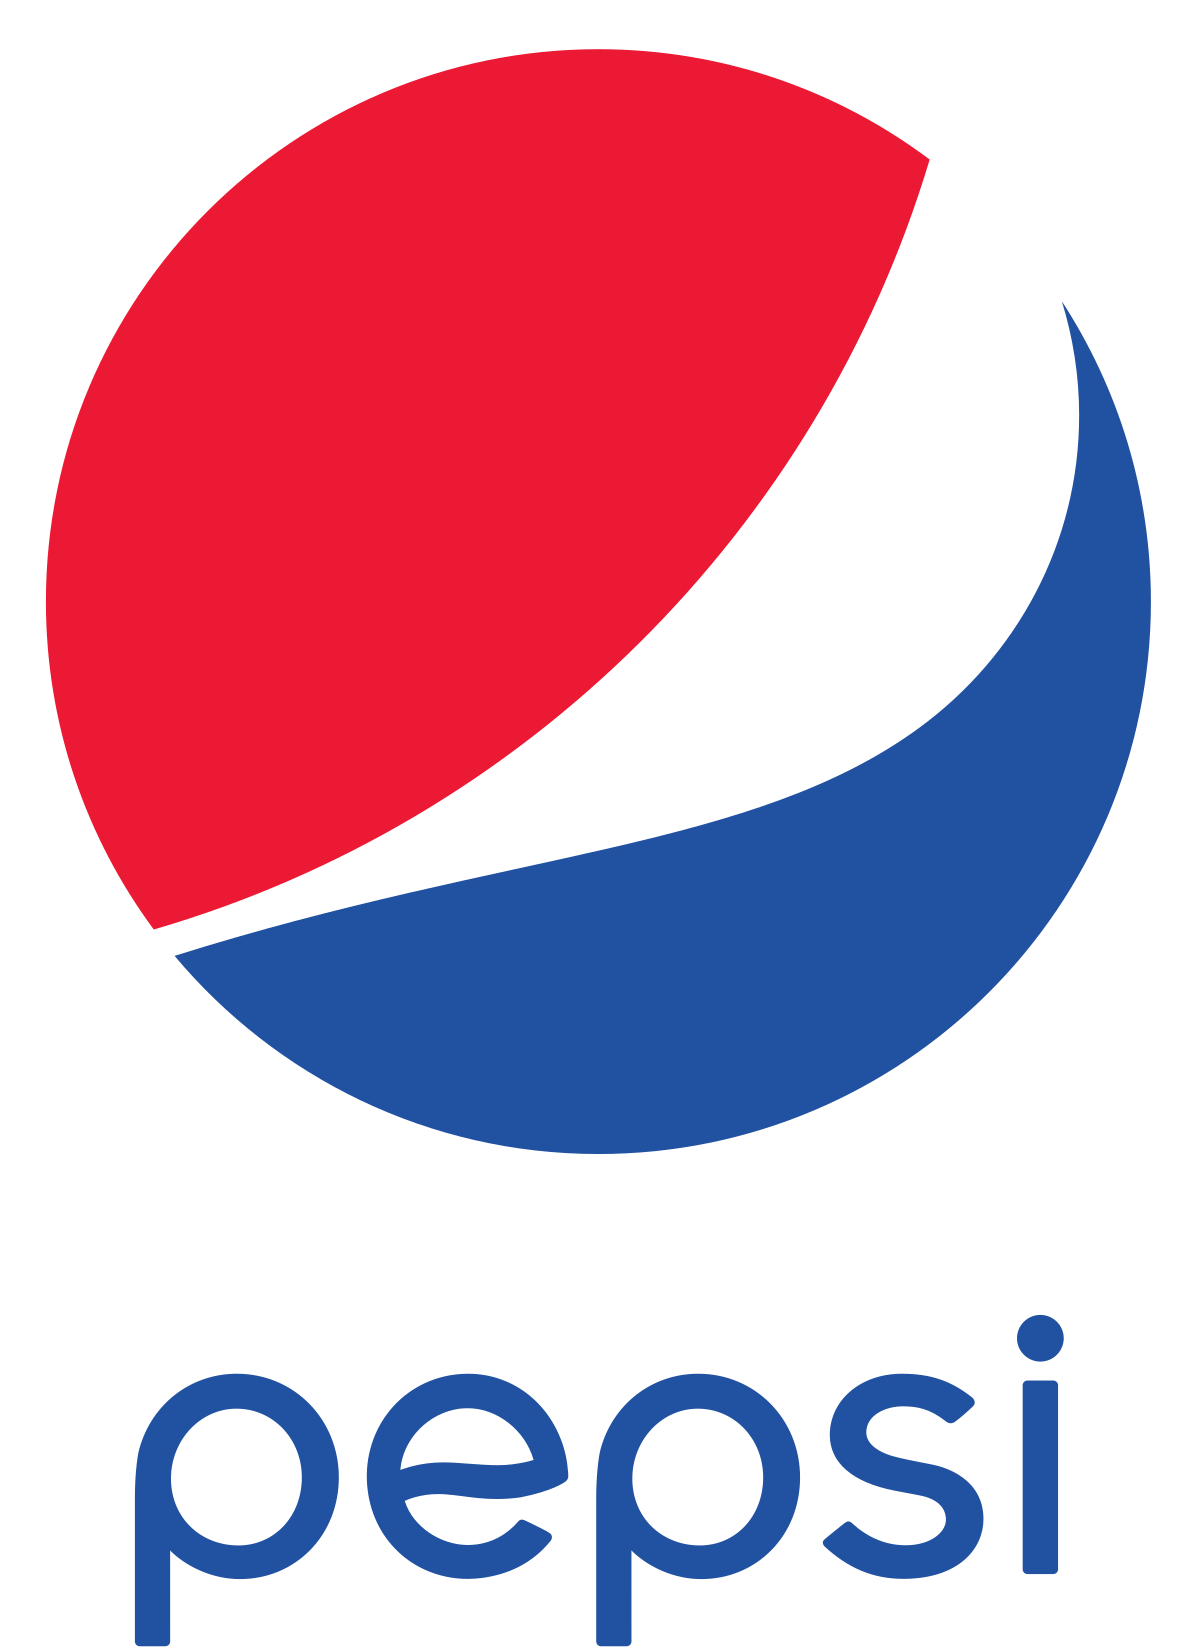 Famous Drinks Logo - Pepsi Globe